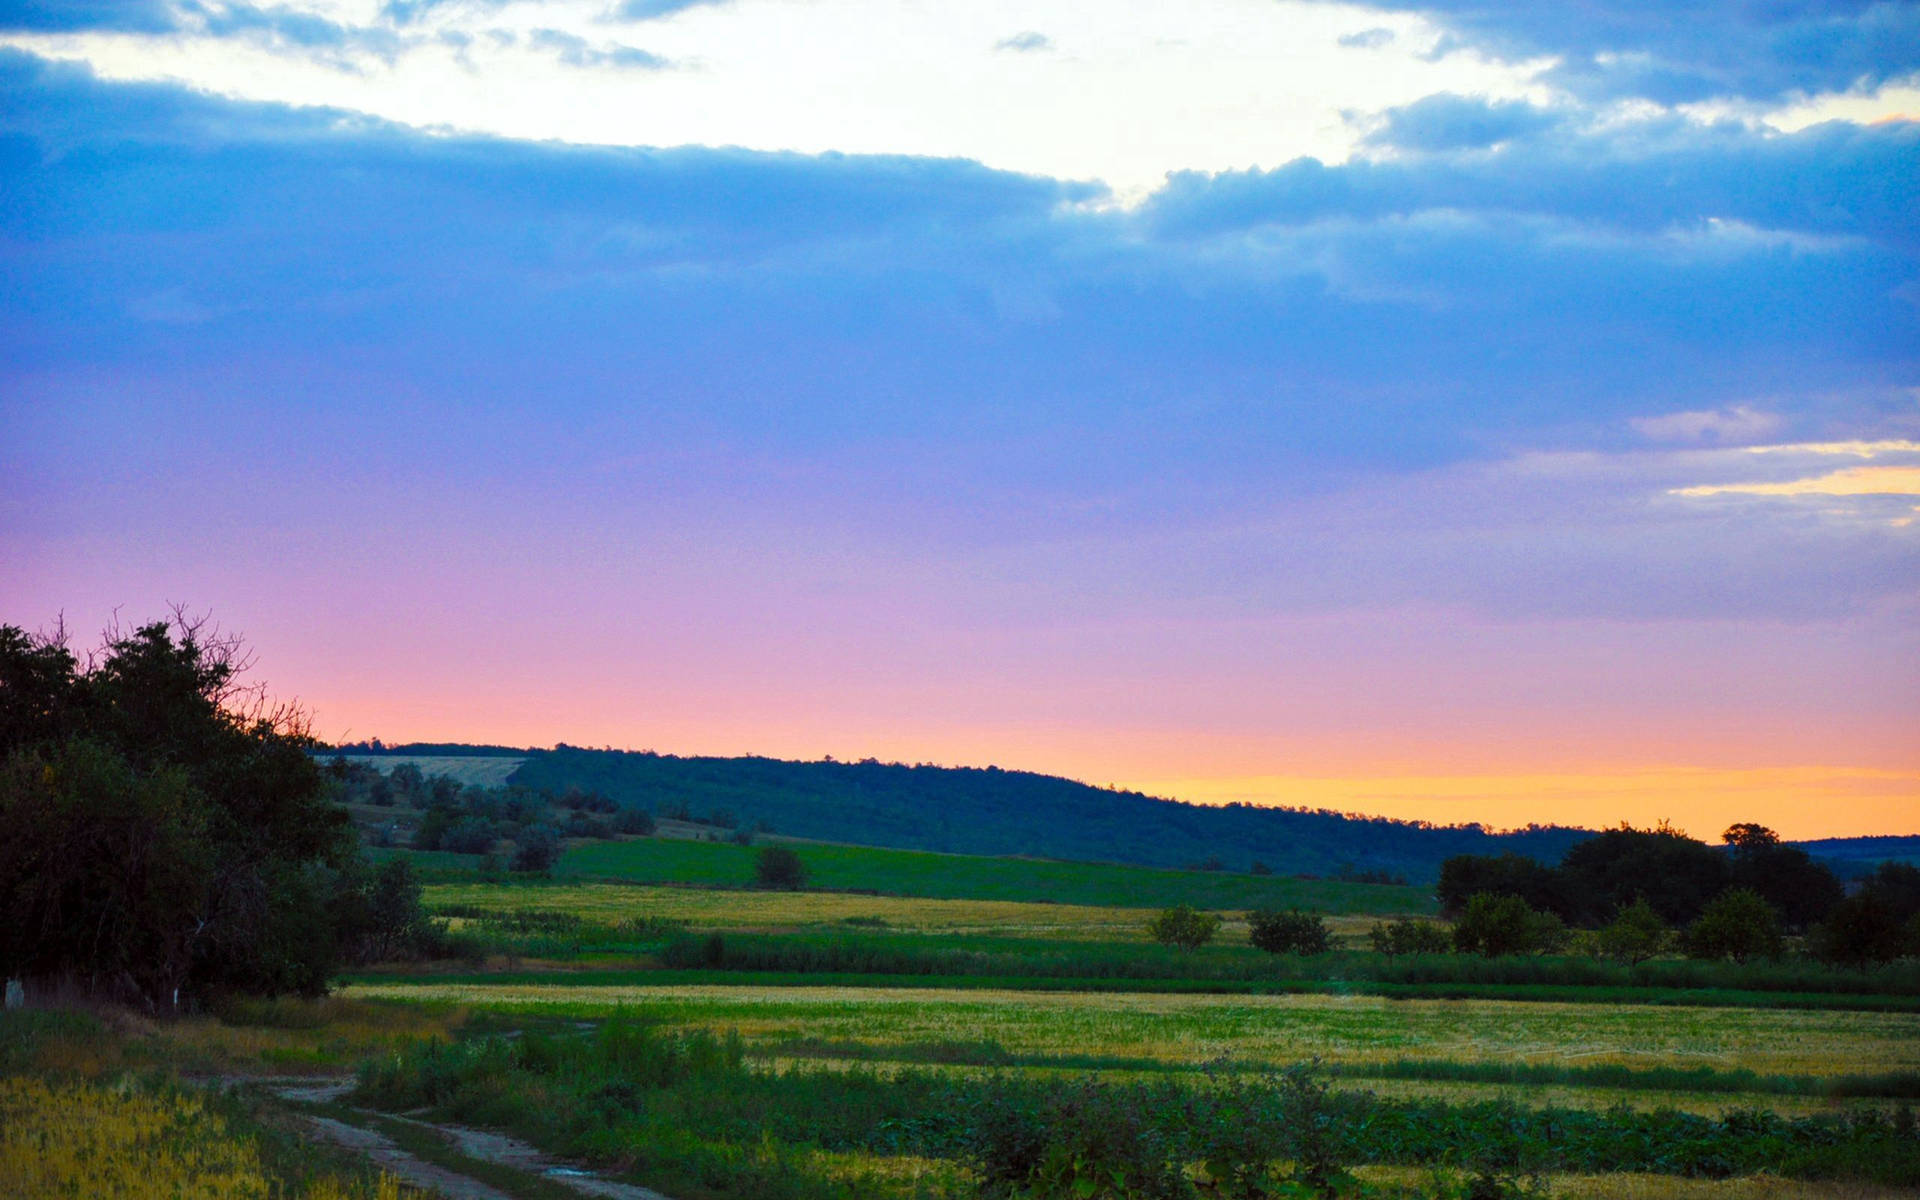 Enjoy the view of a stunning grass field and mountain sunset Wallpaper